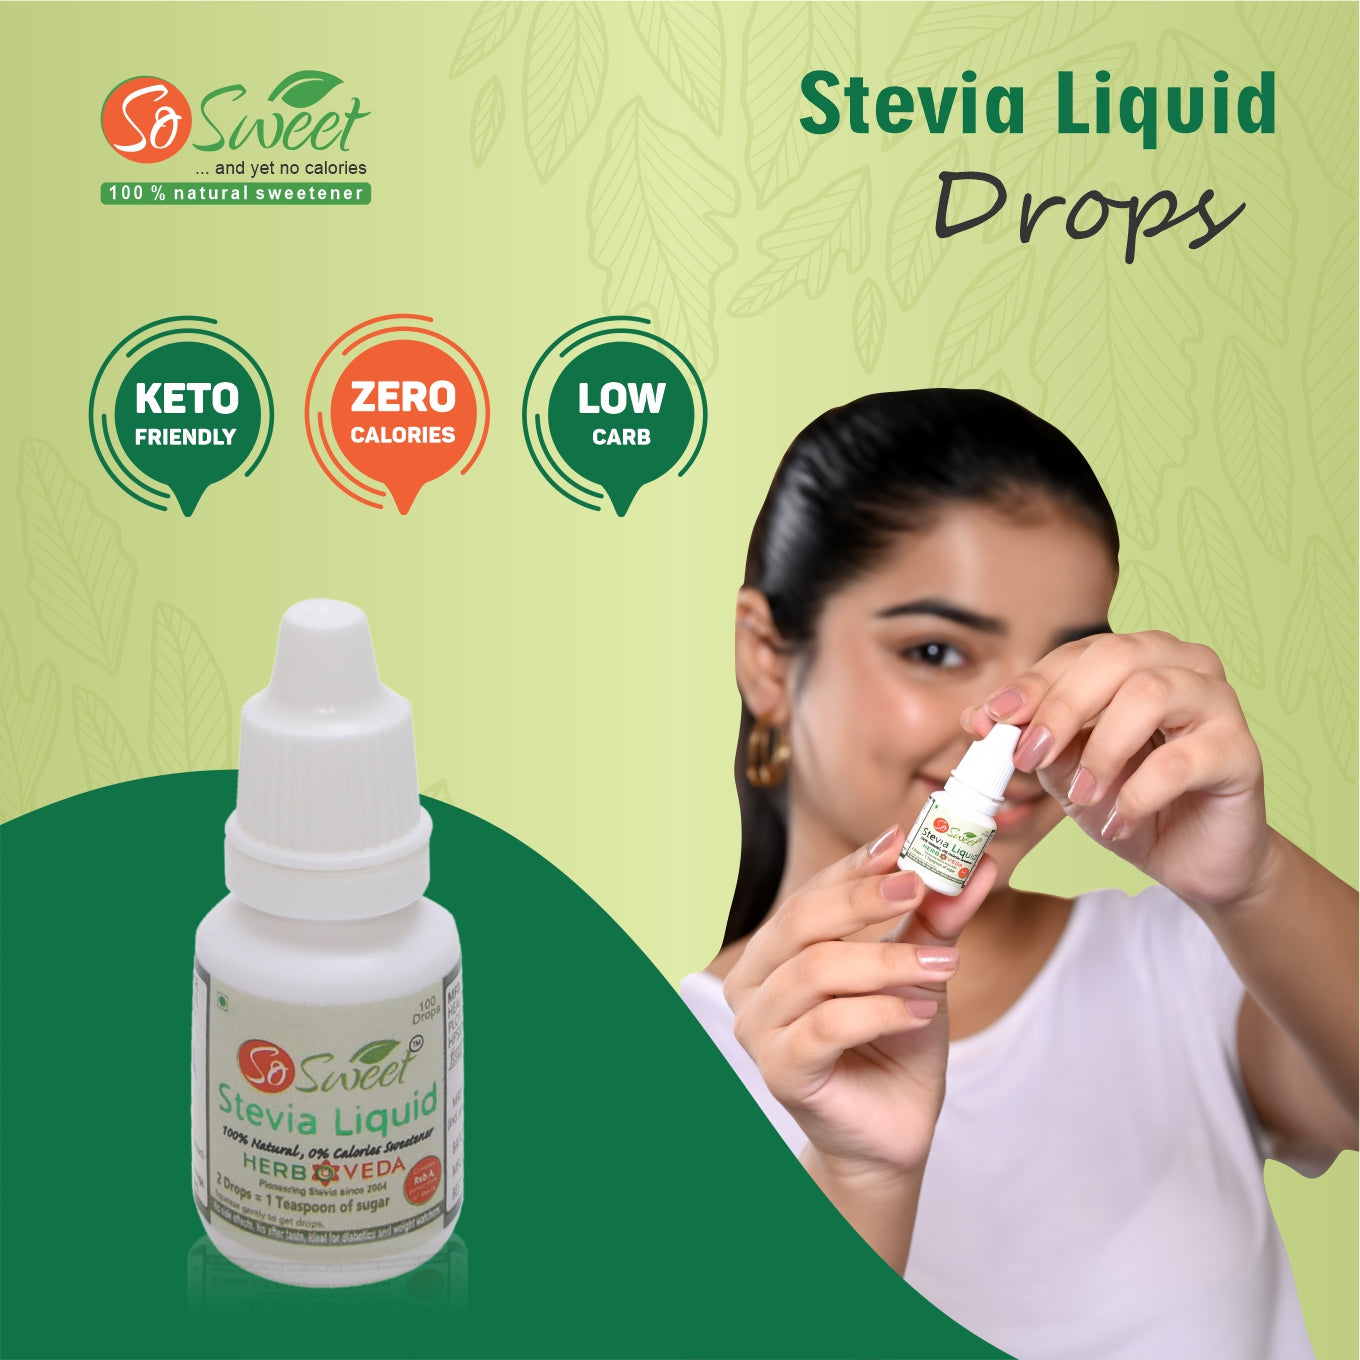 So Sweet Stevia Liquid Sugar Free 100 Drops - 5ml | Zero Calorie | Diabetic Friendly-Pack of 3